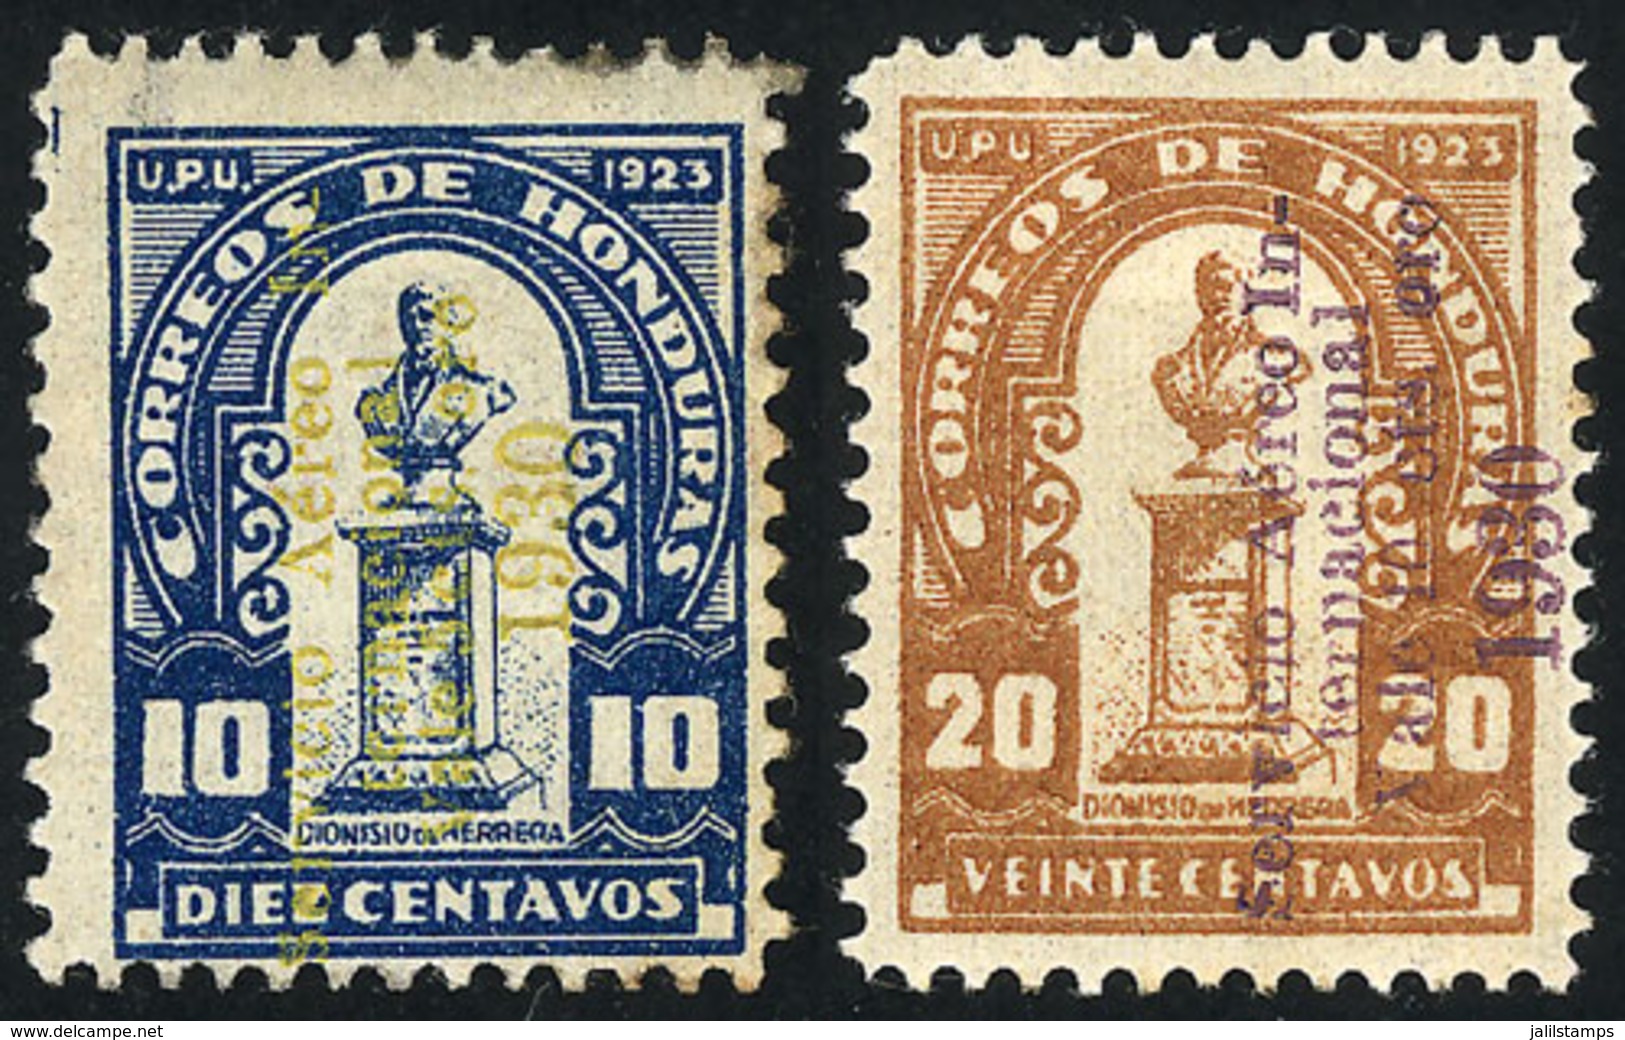 811 HONDURAS: Sc.C21 + C24, 1930 5c. On 10c. With YELLOW Overprint + 10c. On 20c., VIOLE - Honduras